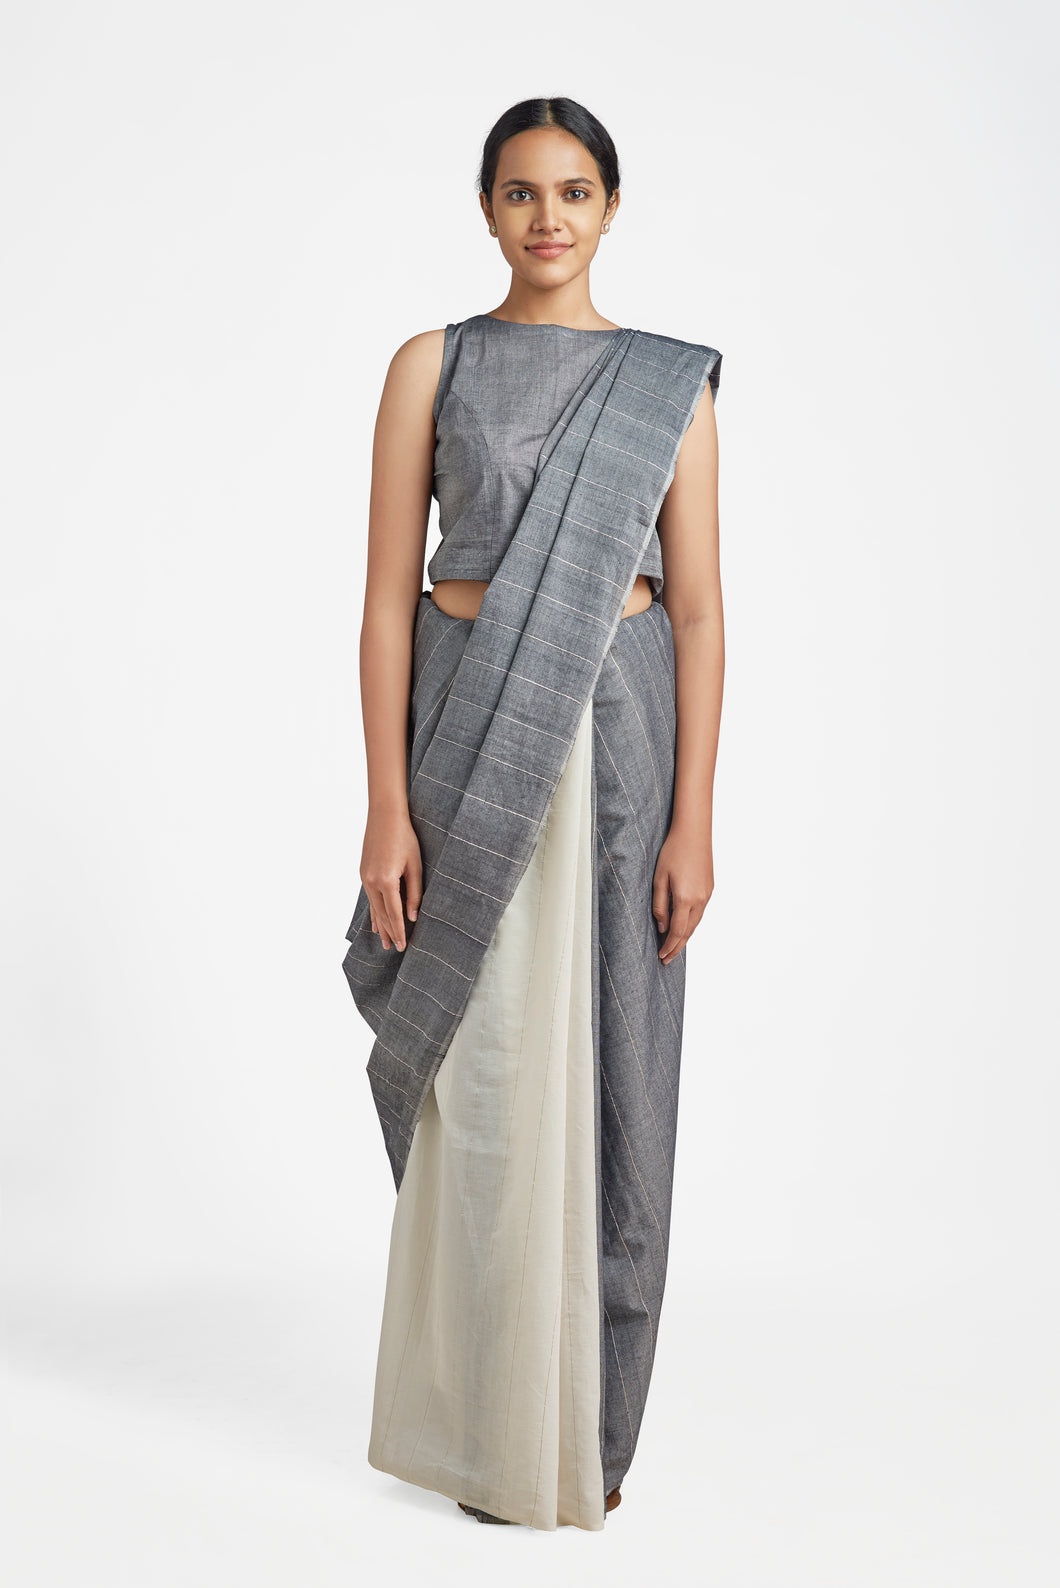  Luxury handloom cotton sarees - House Of Three